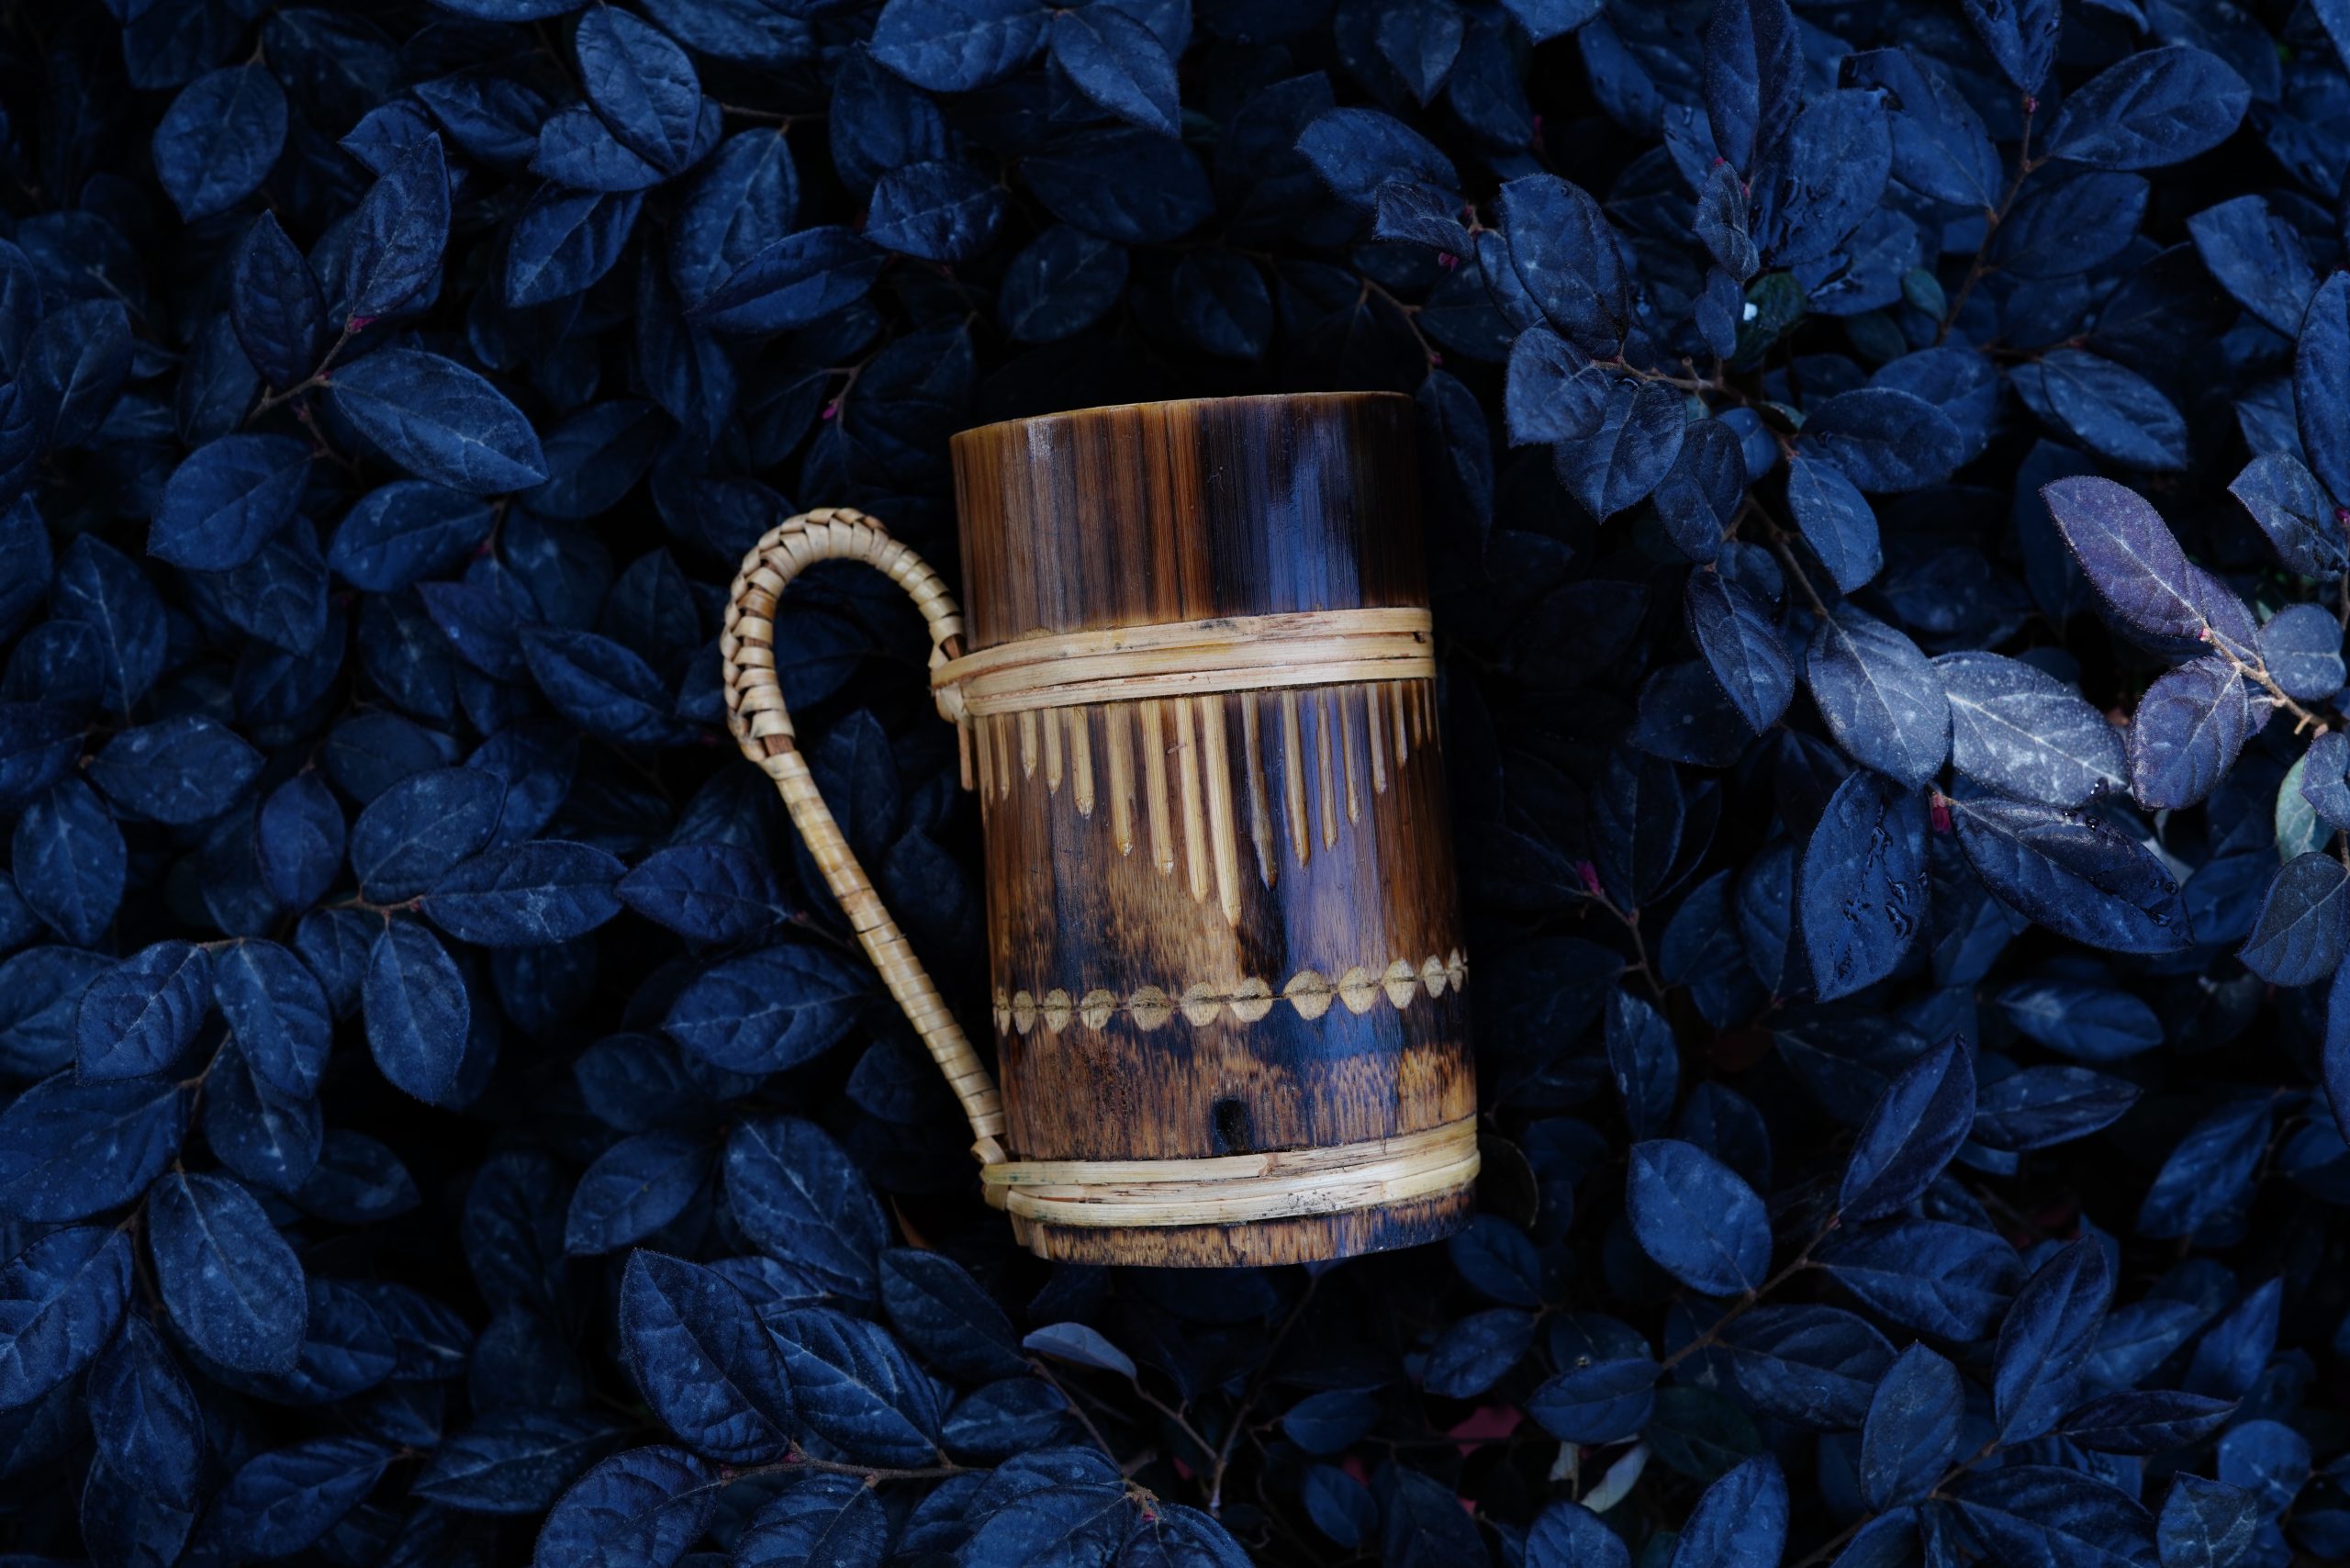 A wooden mug